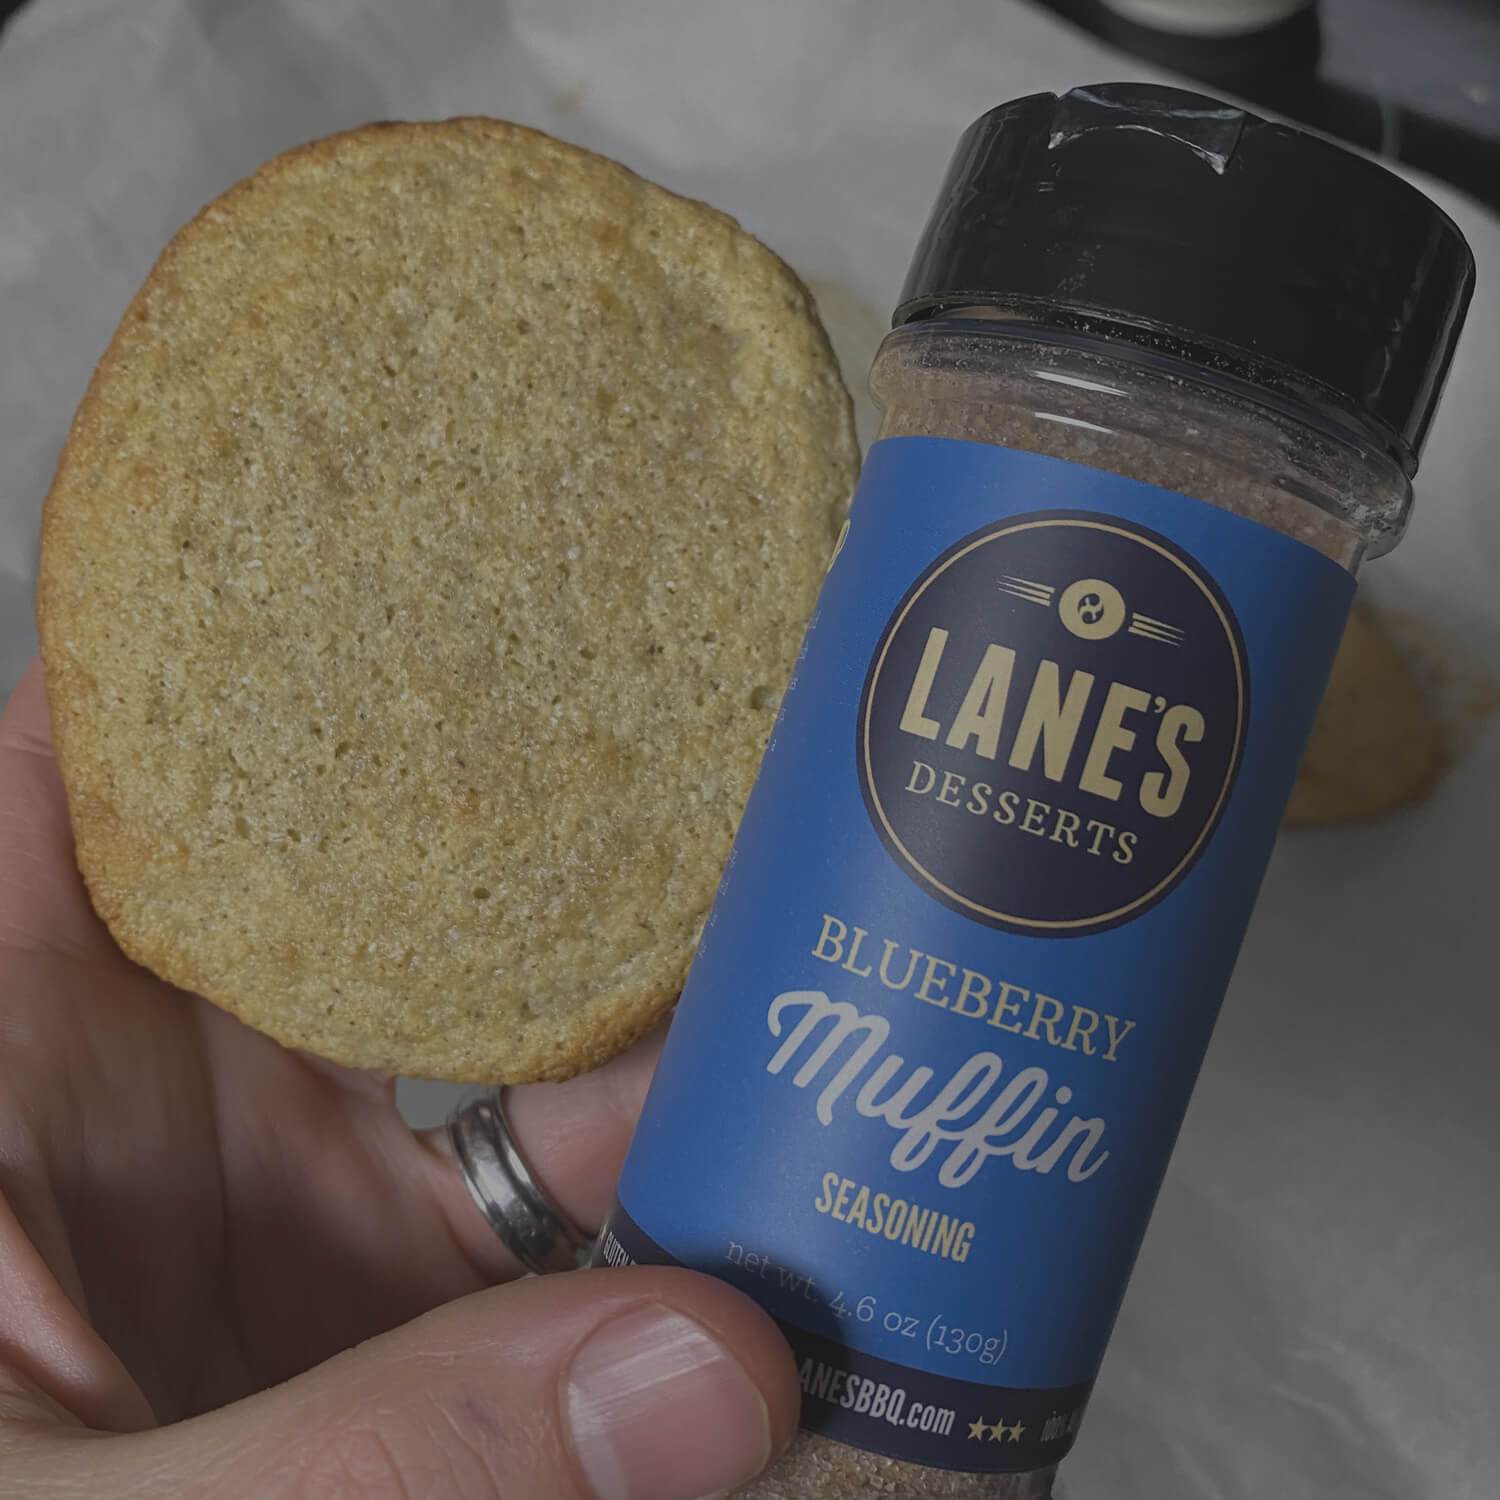 Lane's Dessert Rub with cookie